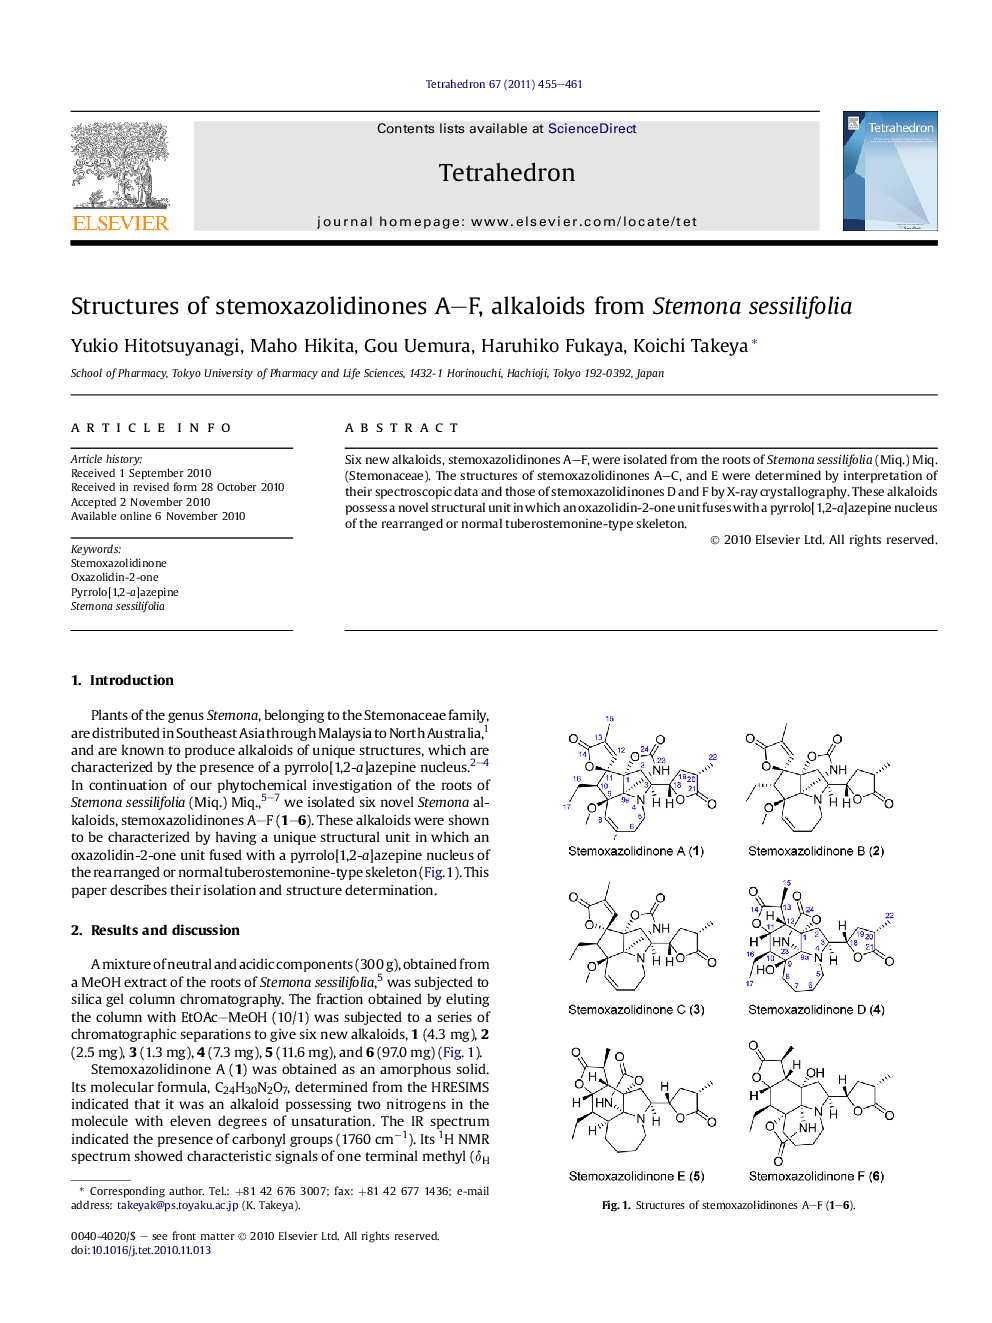 Structures of stemoxazolidinones A-F, alkaloids from Stemona sessilifolia